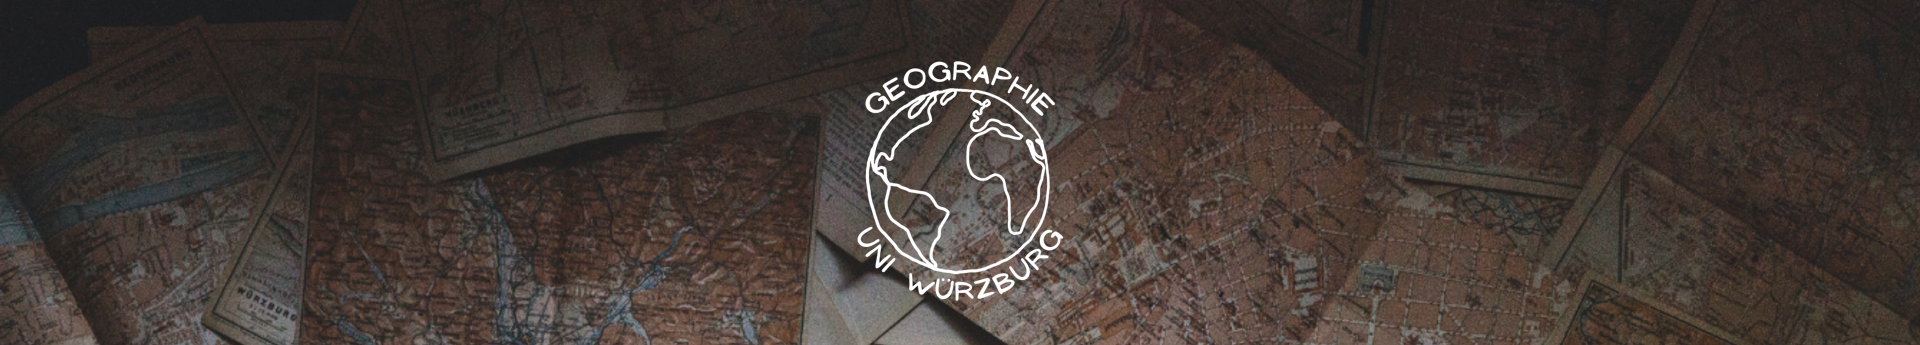 FSI Geographie Würzburg Title Image